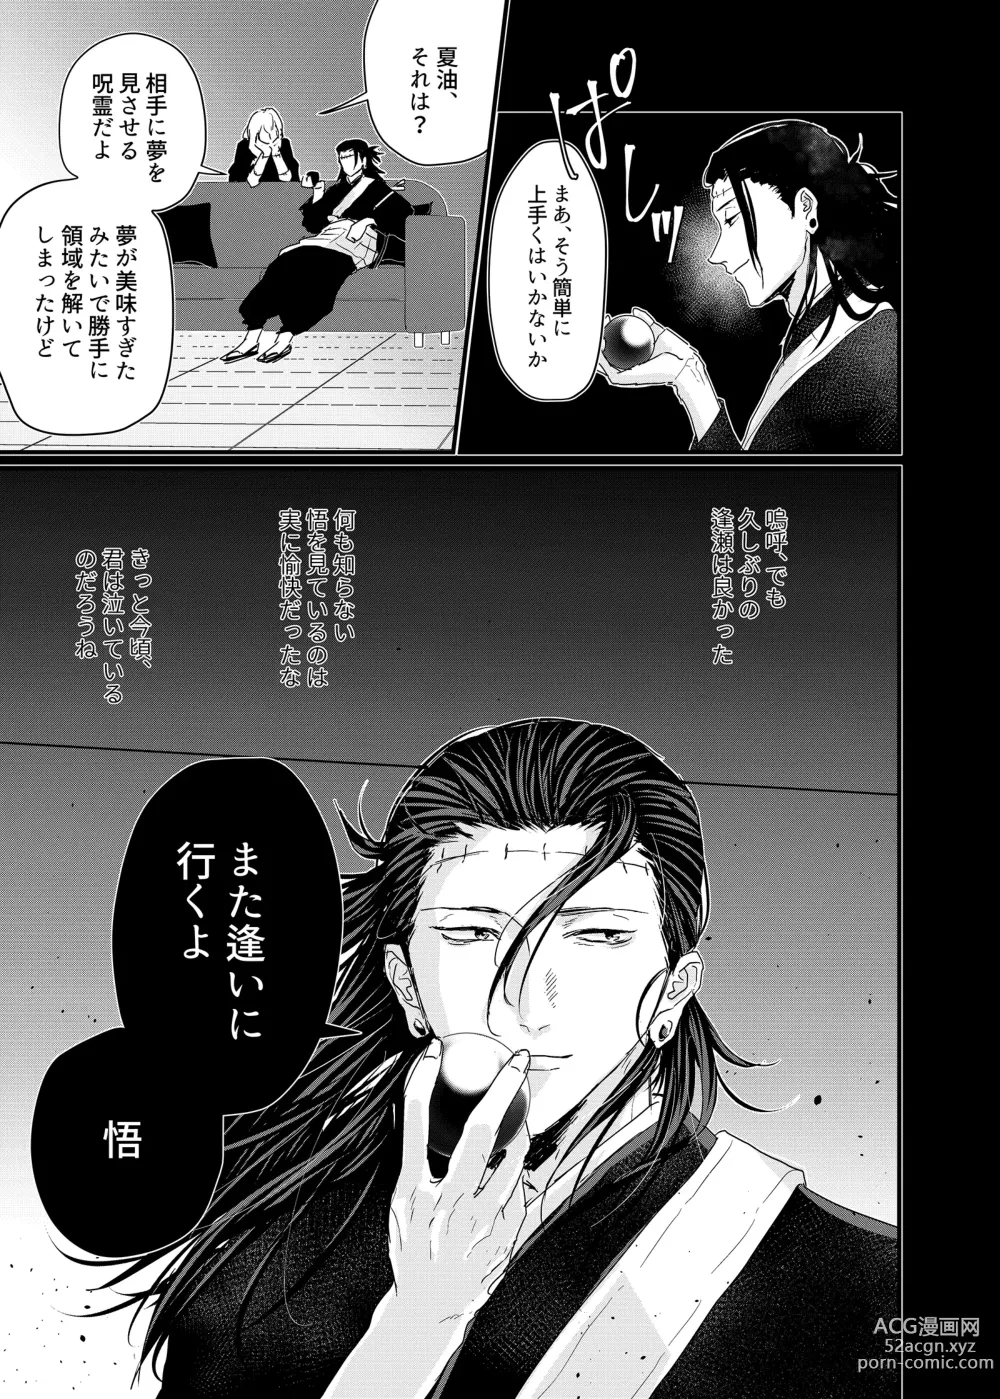 Page 36 of doujinshi Manjushage no Yume no Naka